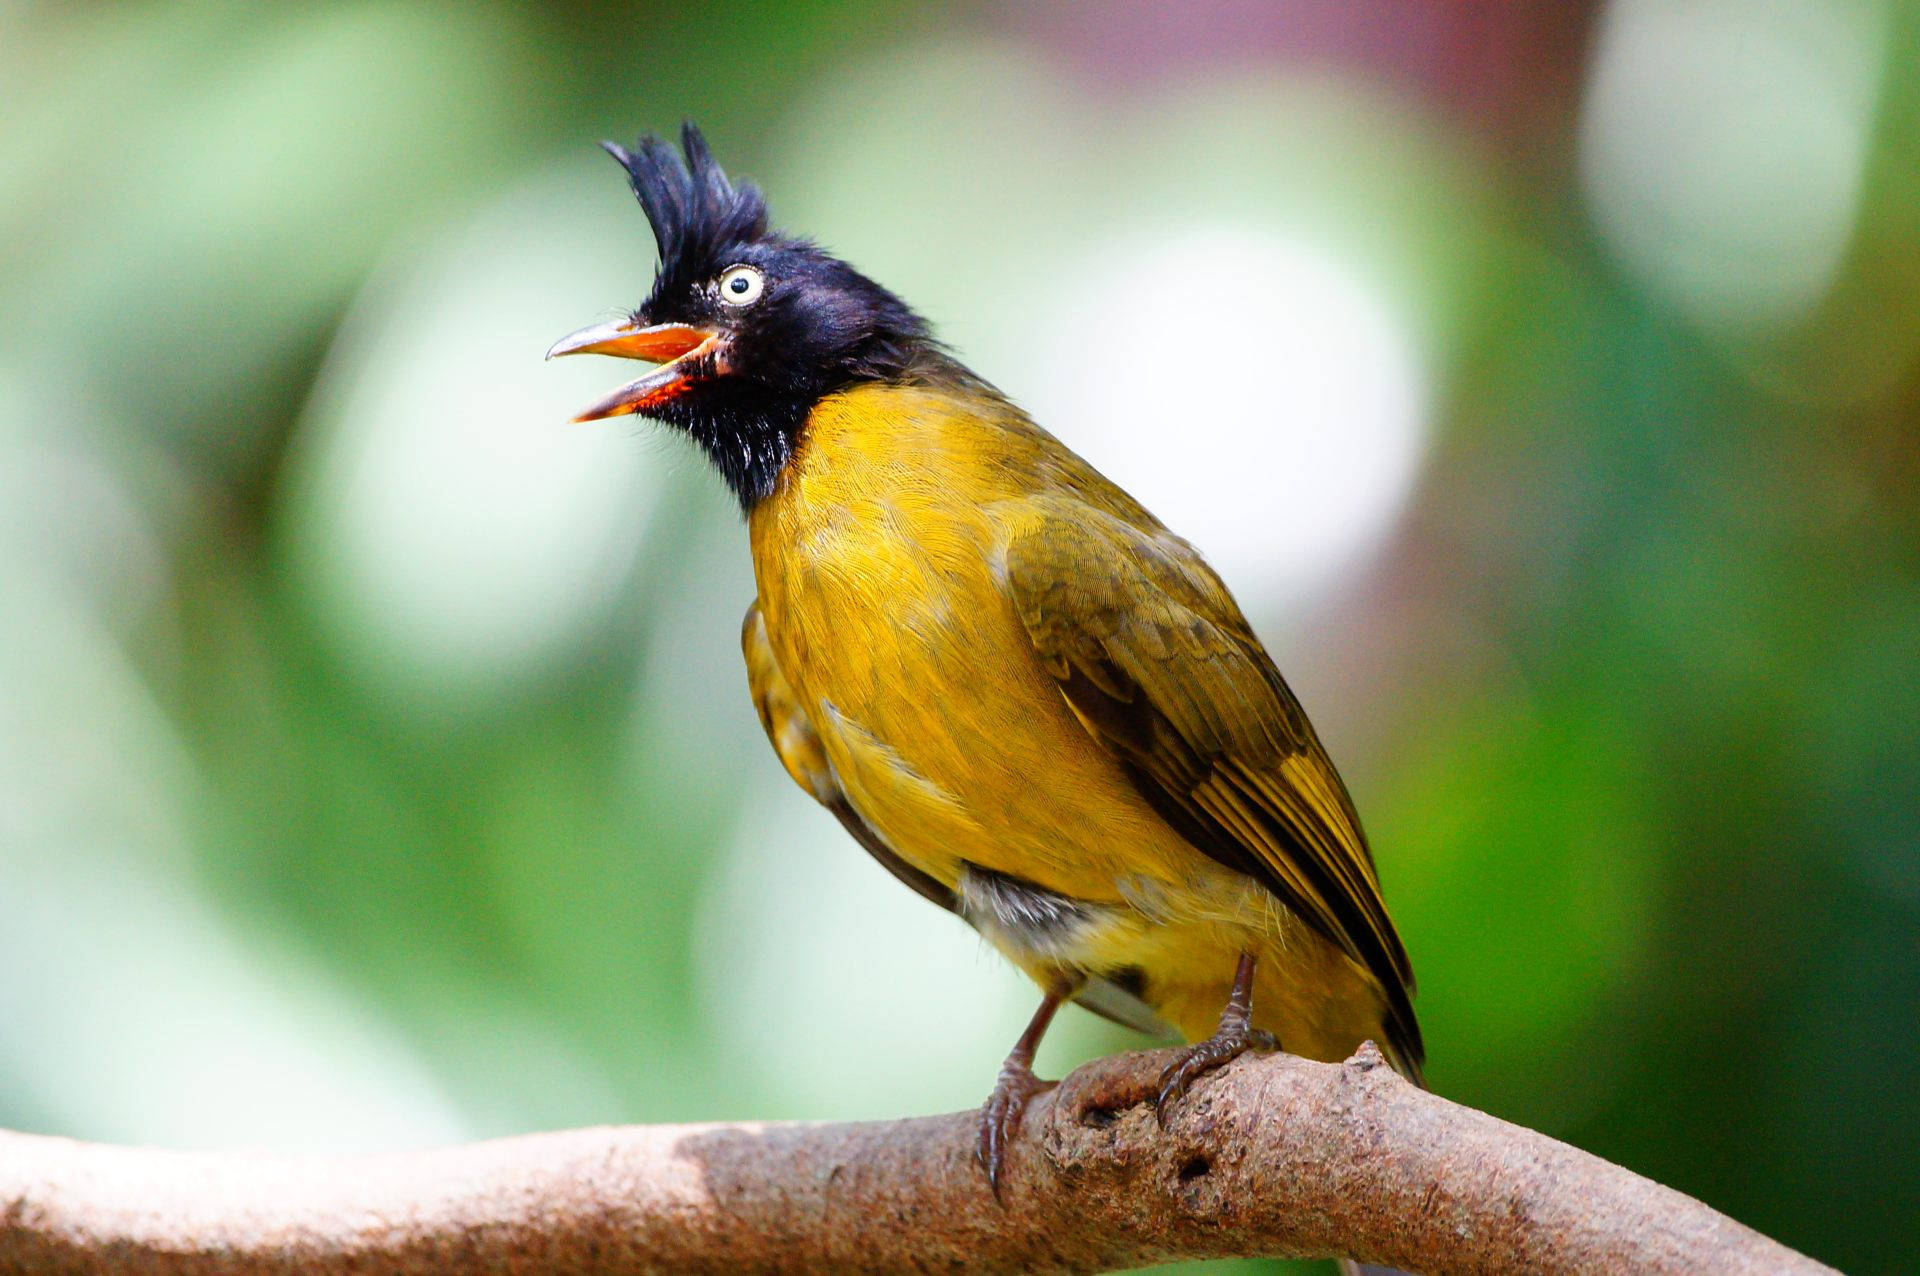 Caption: Vibrant Yellow Bird With Black Crest